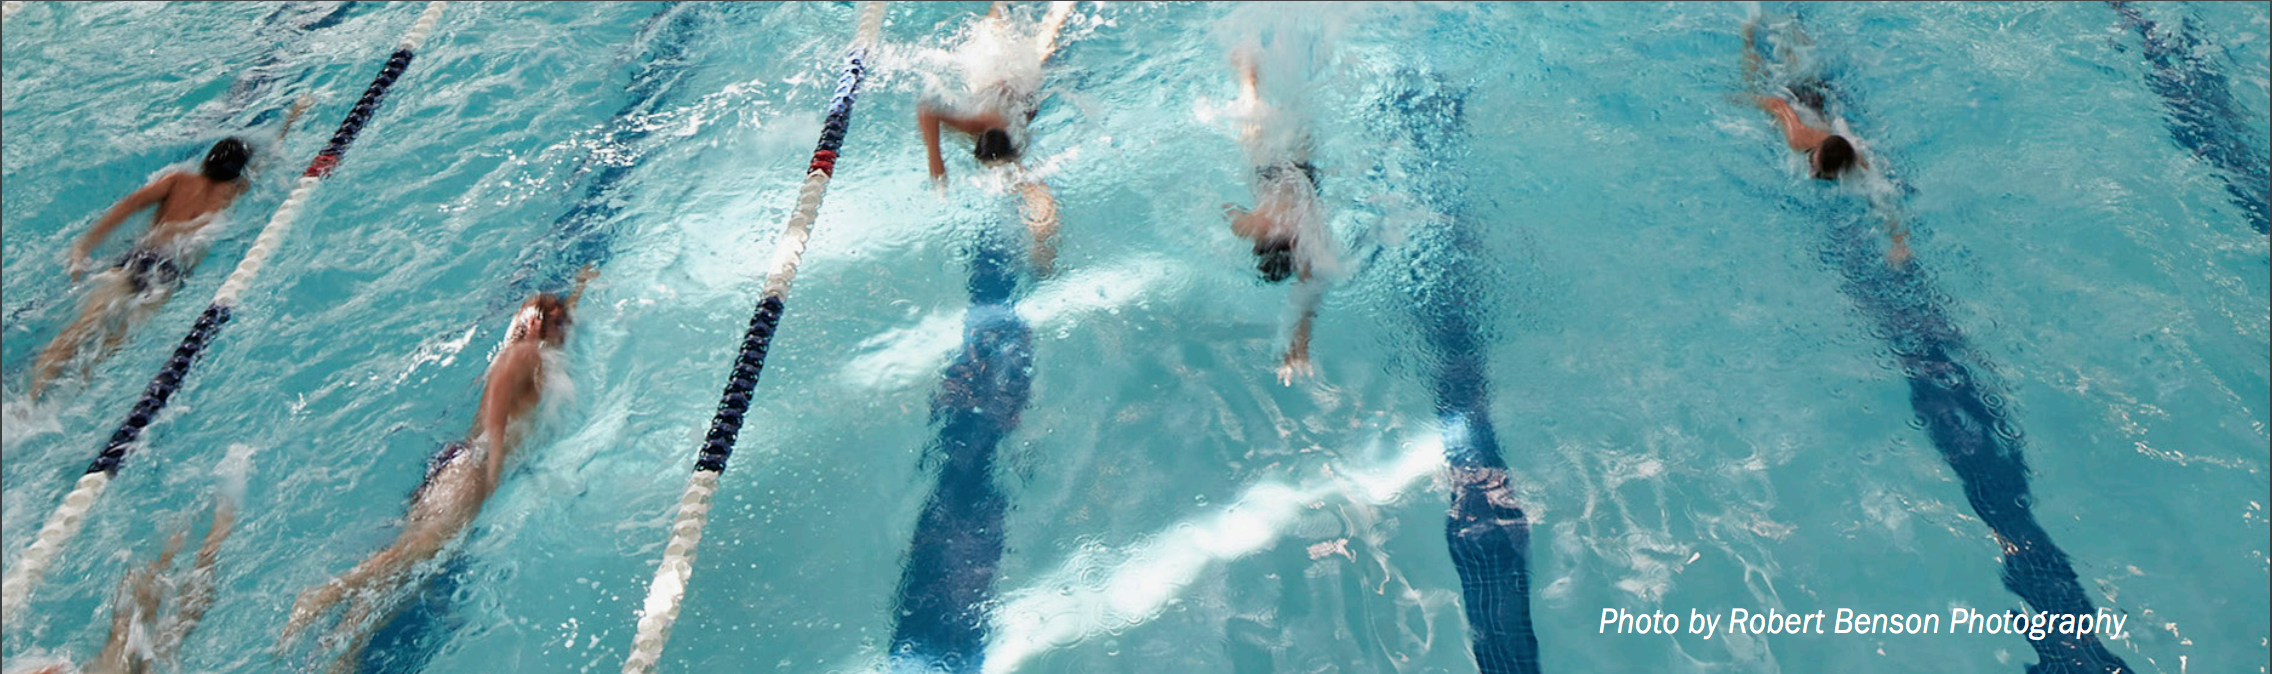 Students Swimming at St Johns Prep -- credit Robert Benson Photography